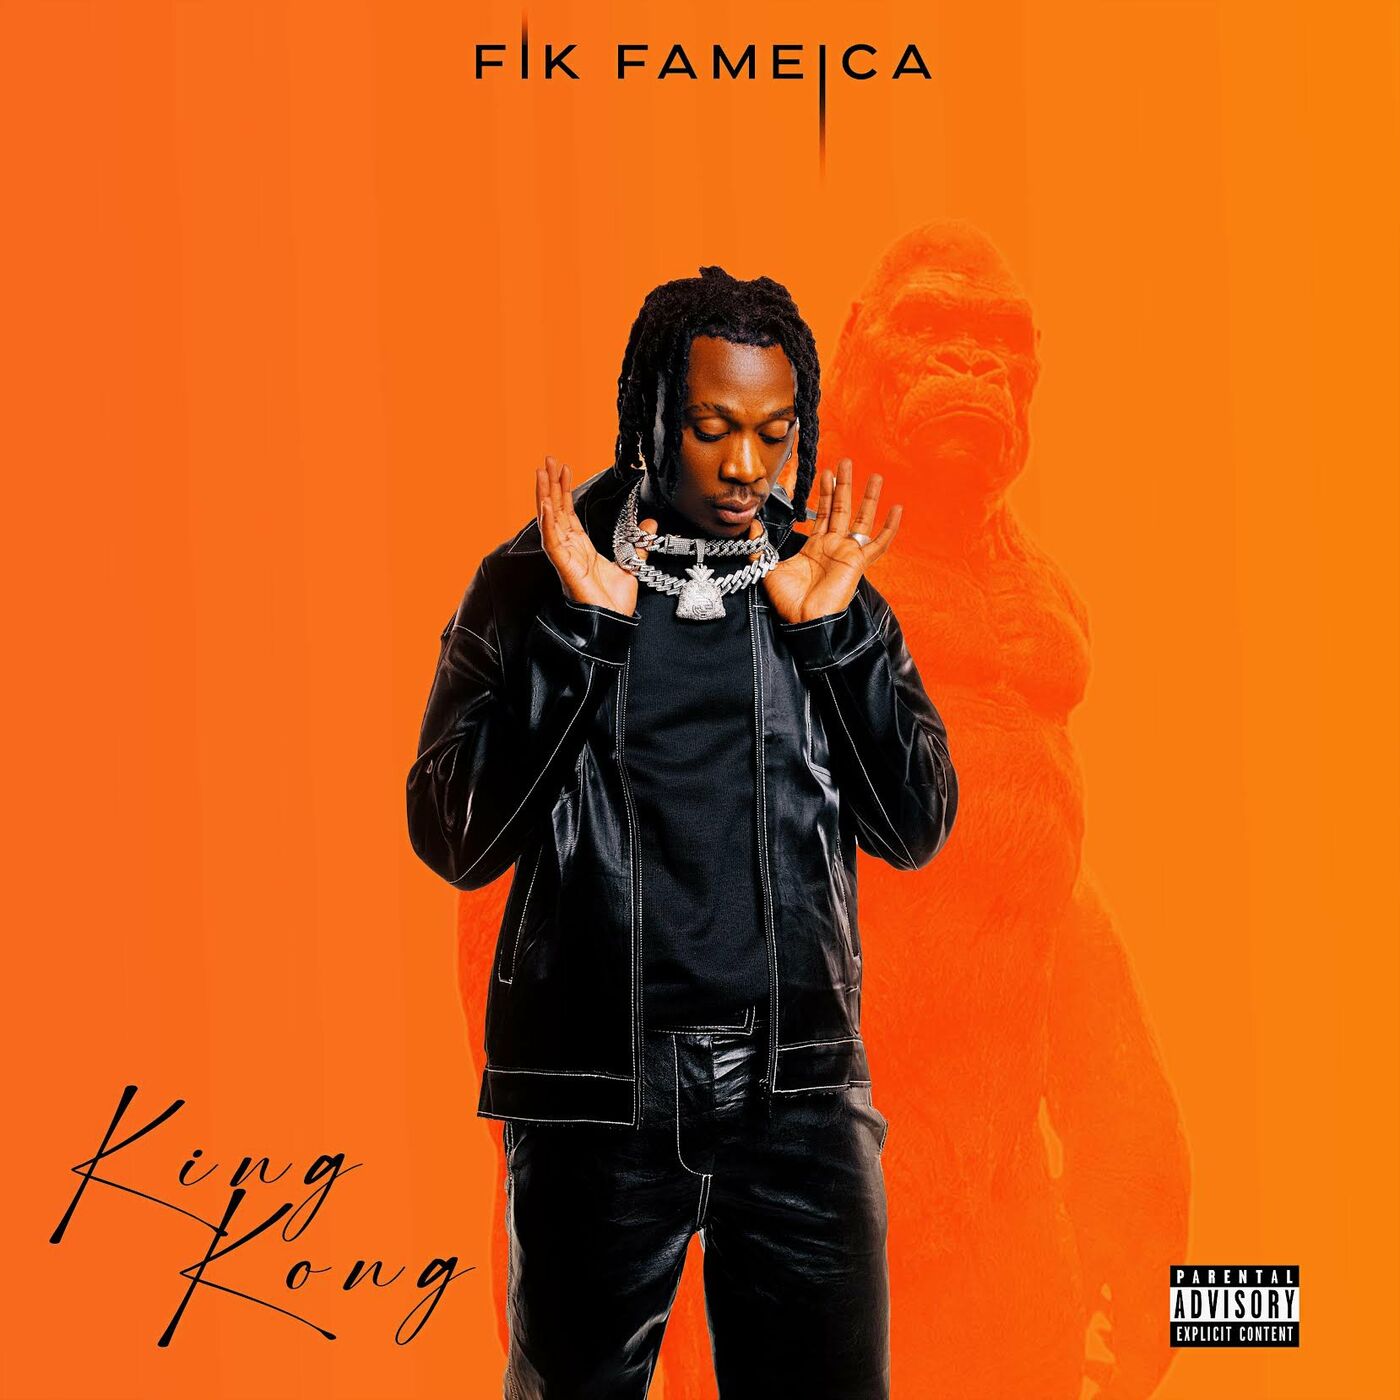 fik-fameica-deep-album-cover